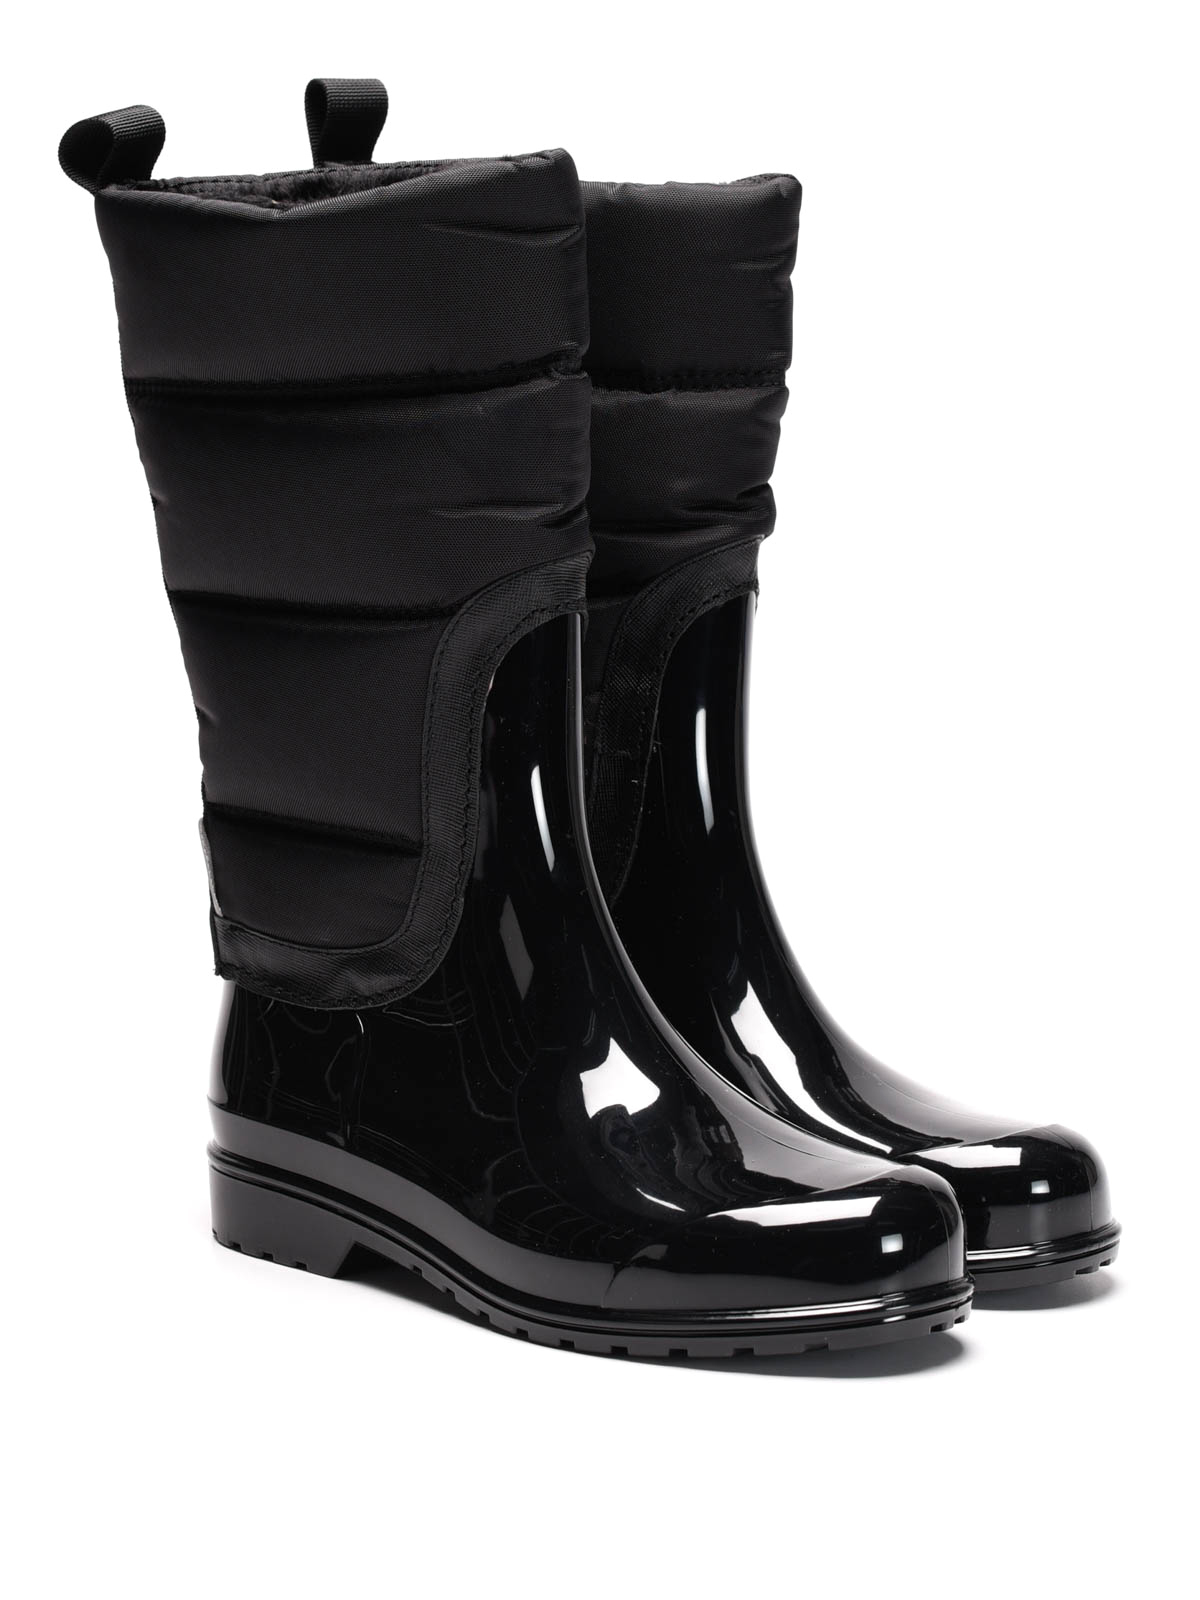 Boots Michael Kors - Cabot rain boots - 40F6CAFB5Q001 